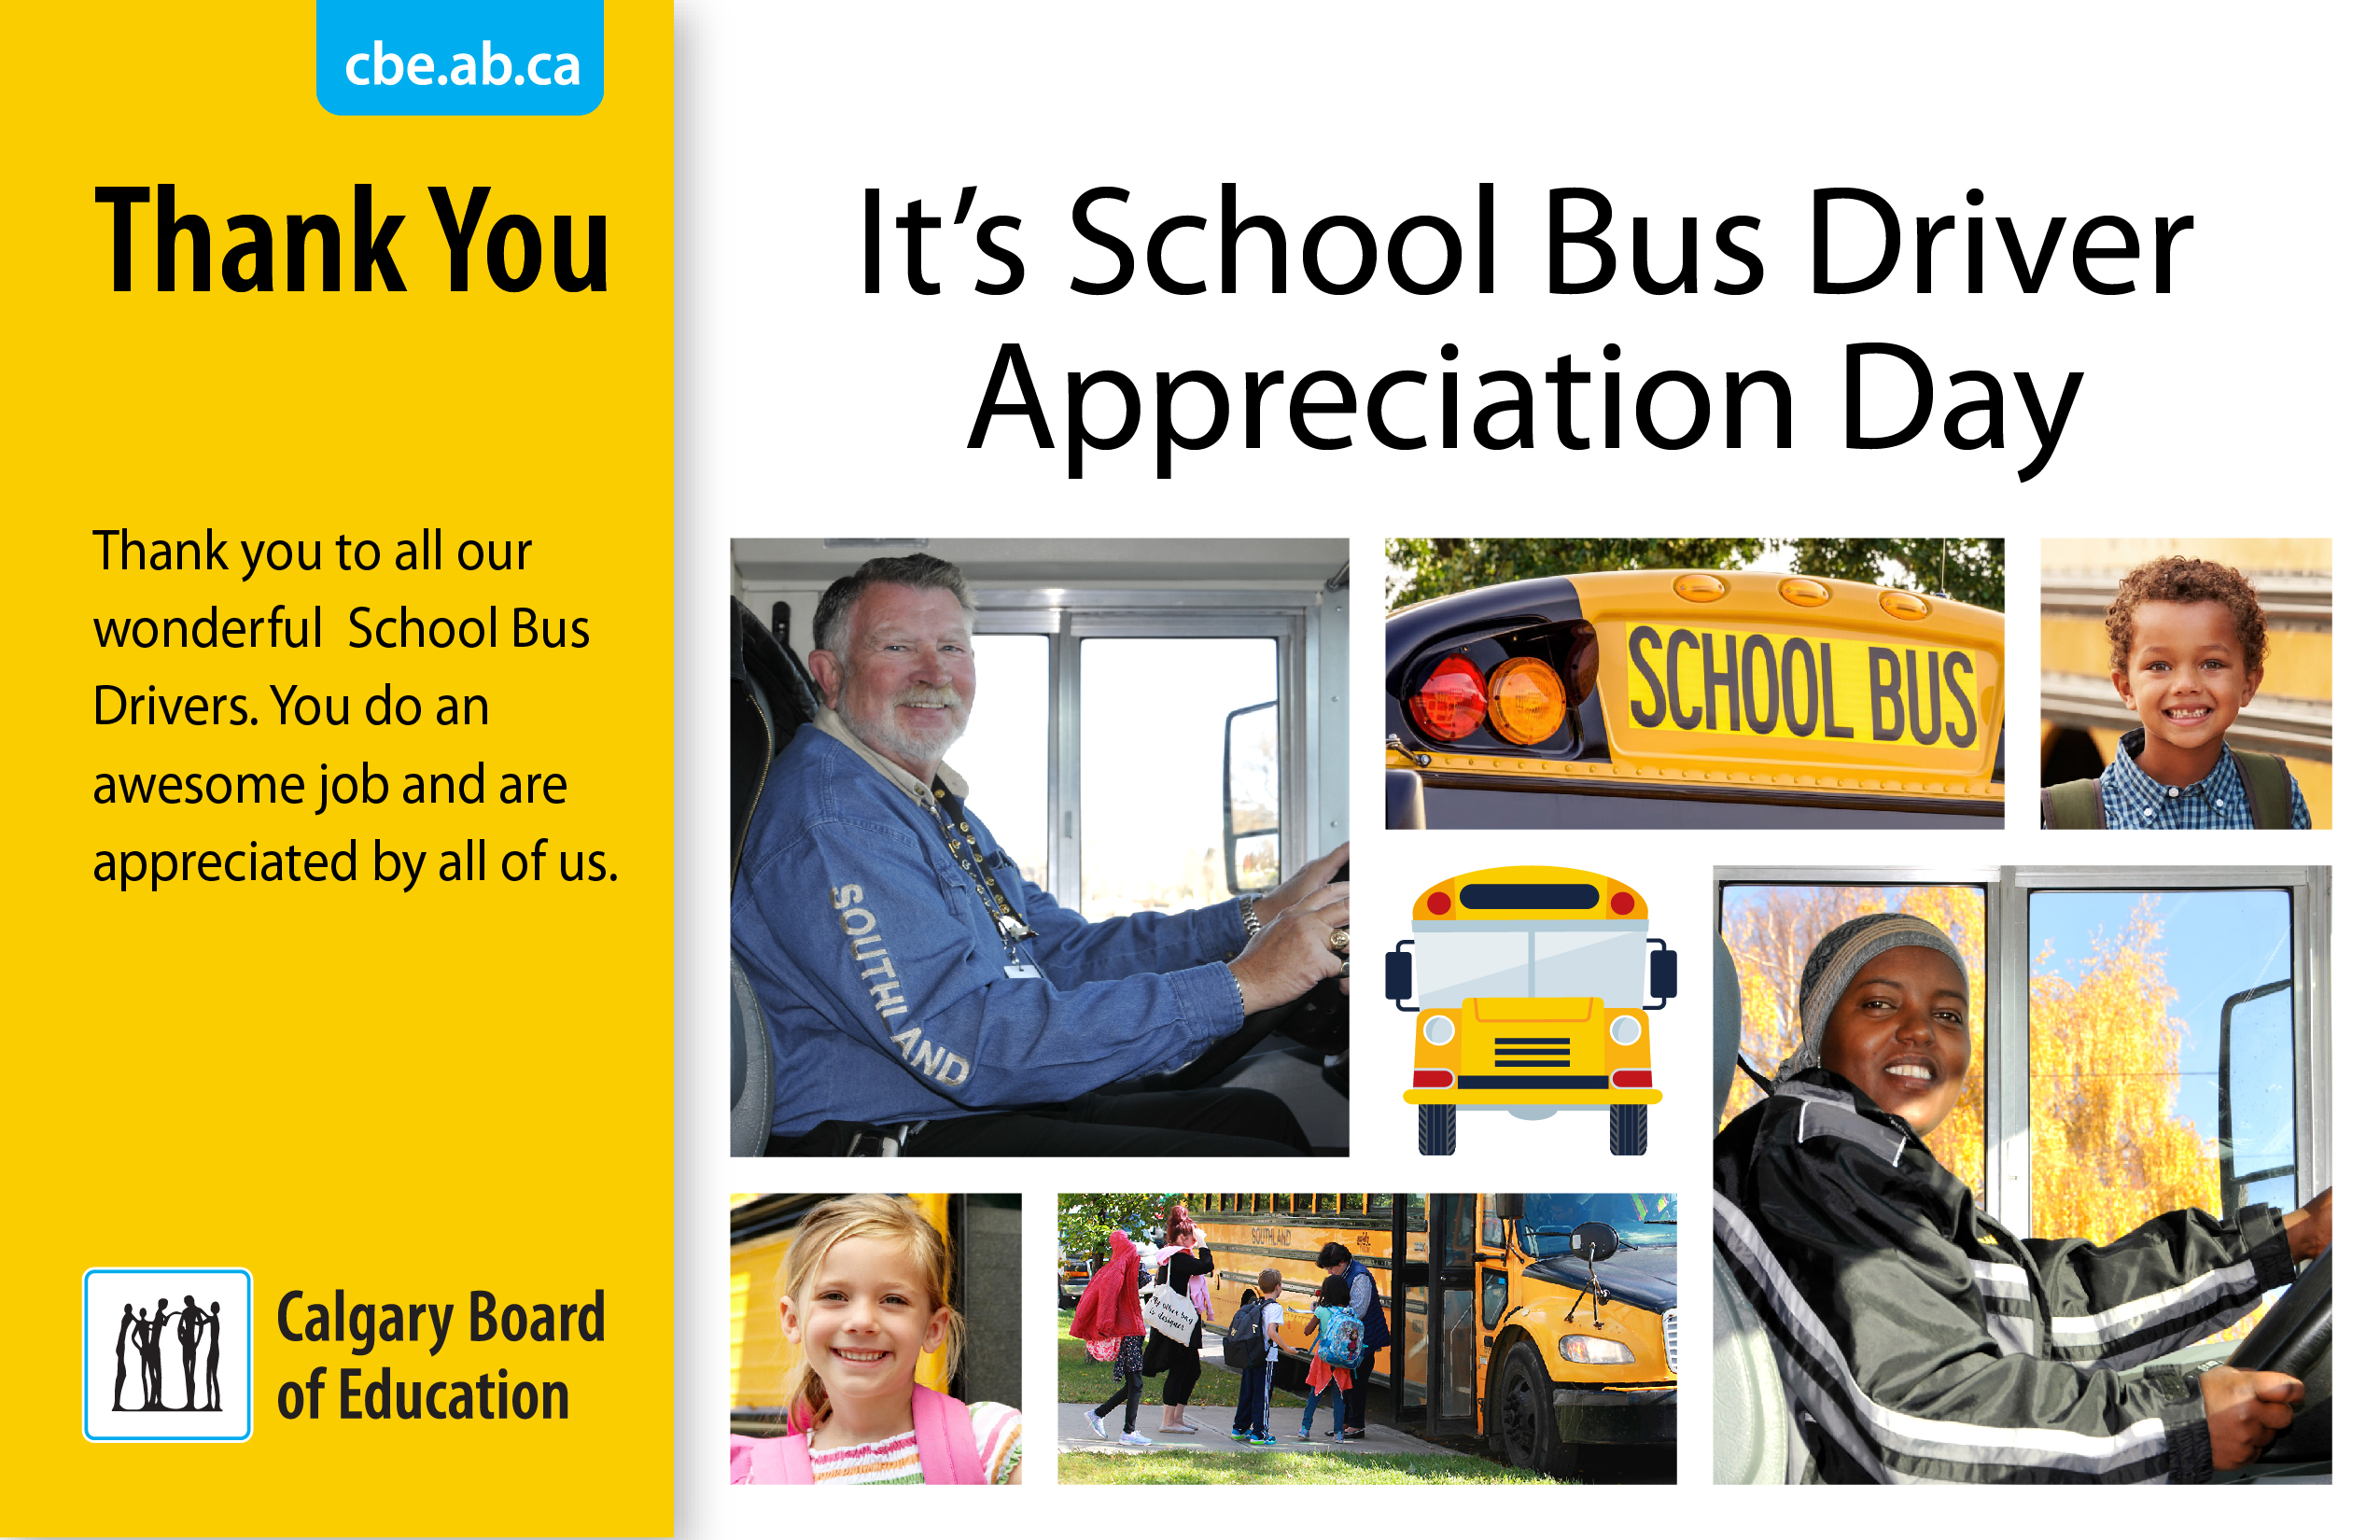 bus driver appreciation